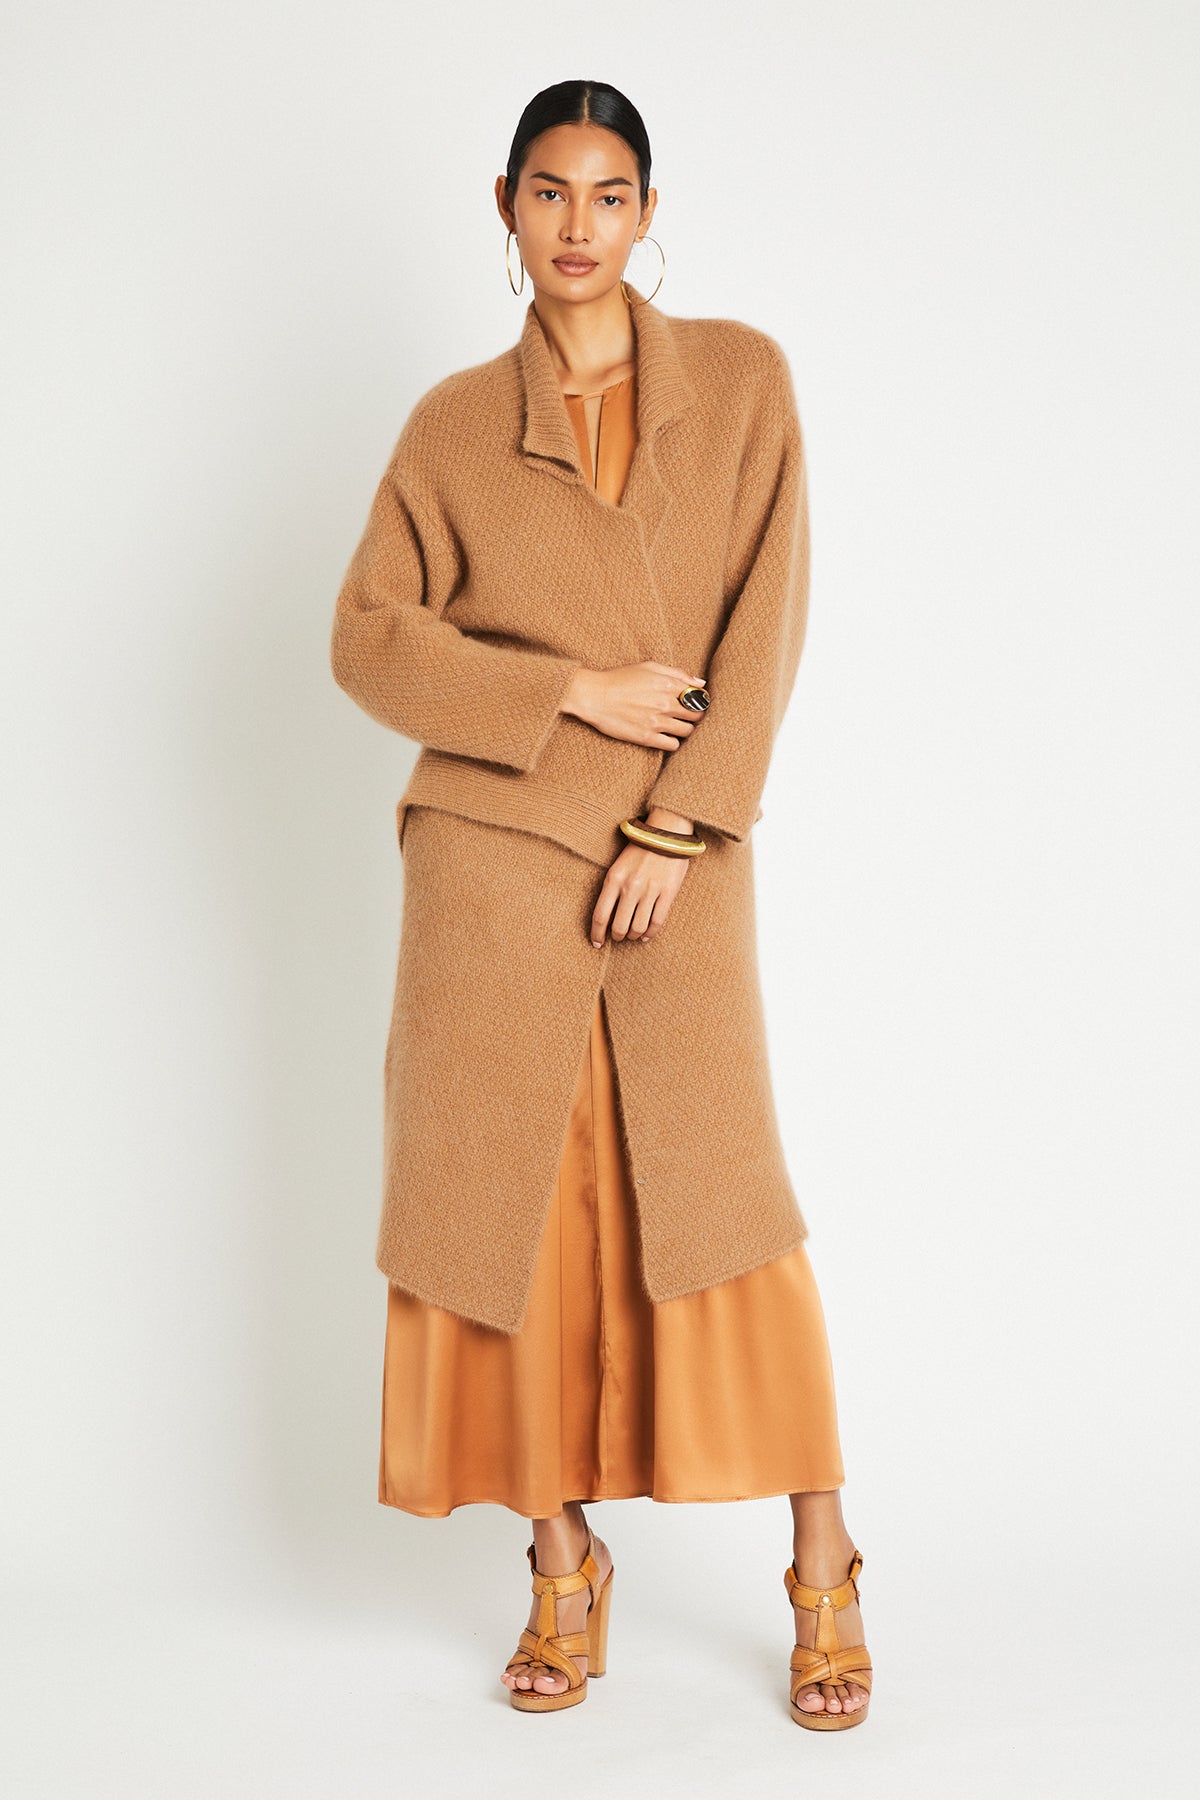 +Beryll Marianne Coat | Camel - +Beryll Marianne Coat | Camel - +Beryll Worn By Good People